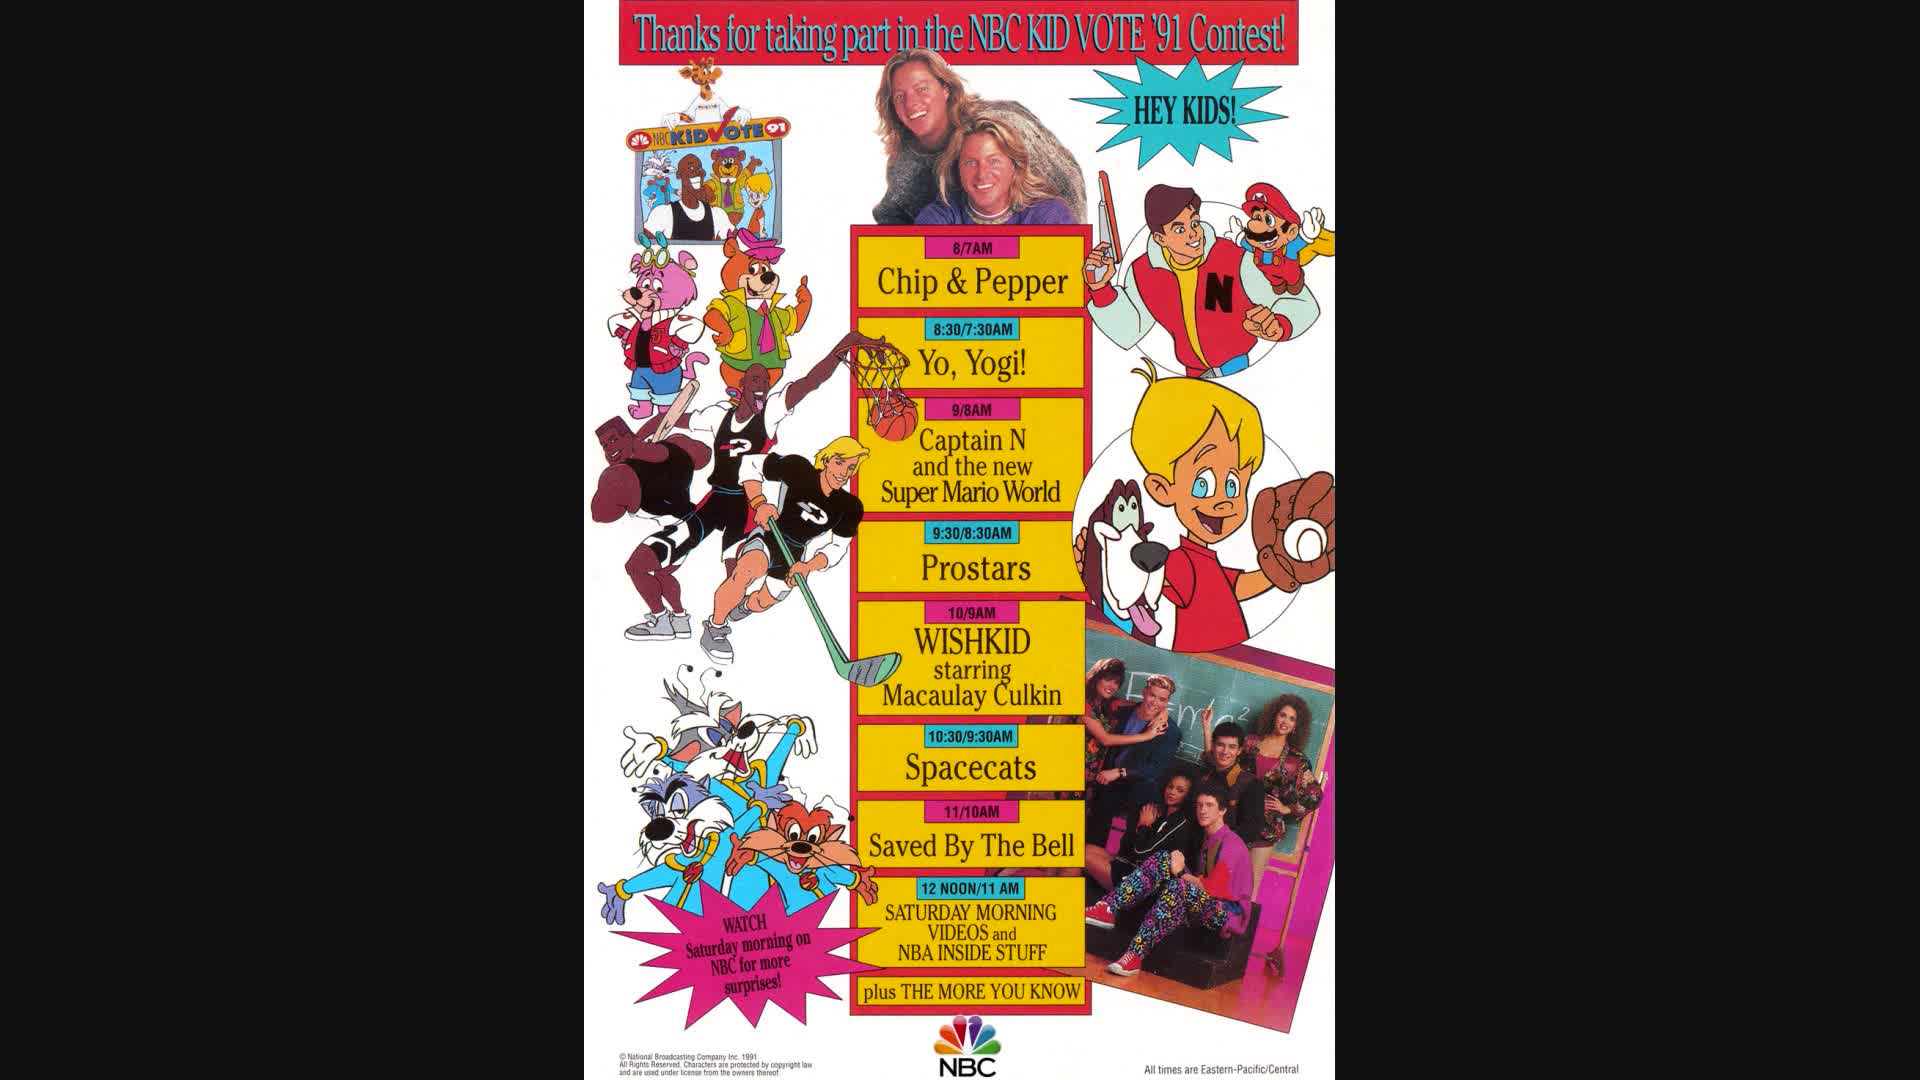 NBCs 1991 Saturday Morning Cartoon Lineup Preview Party Promo Jingle - I Wanna Be on NBC